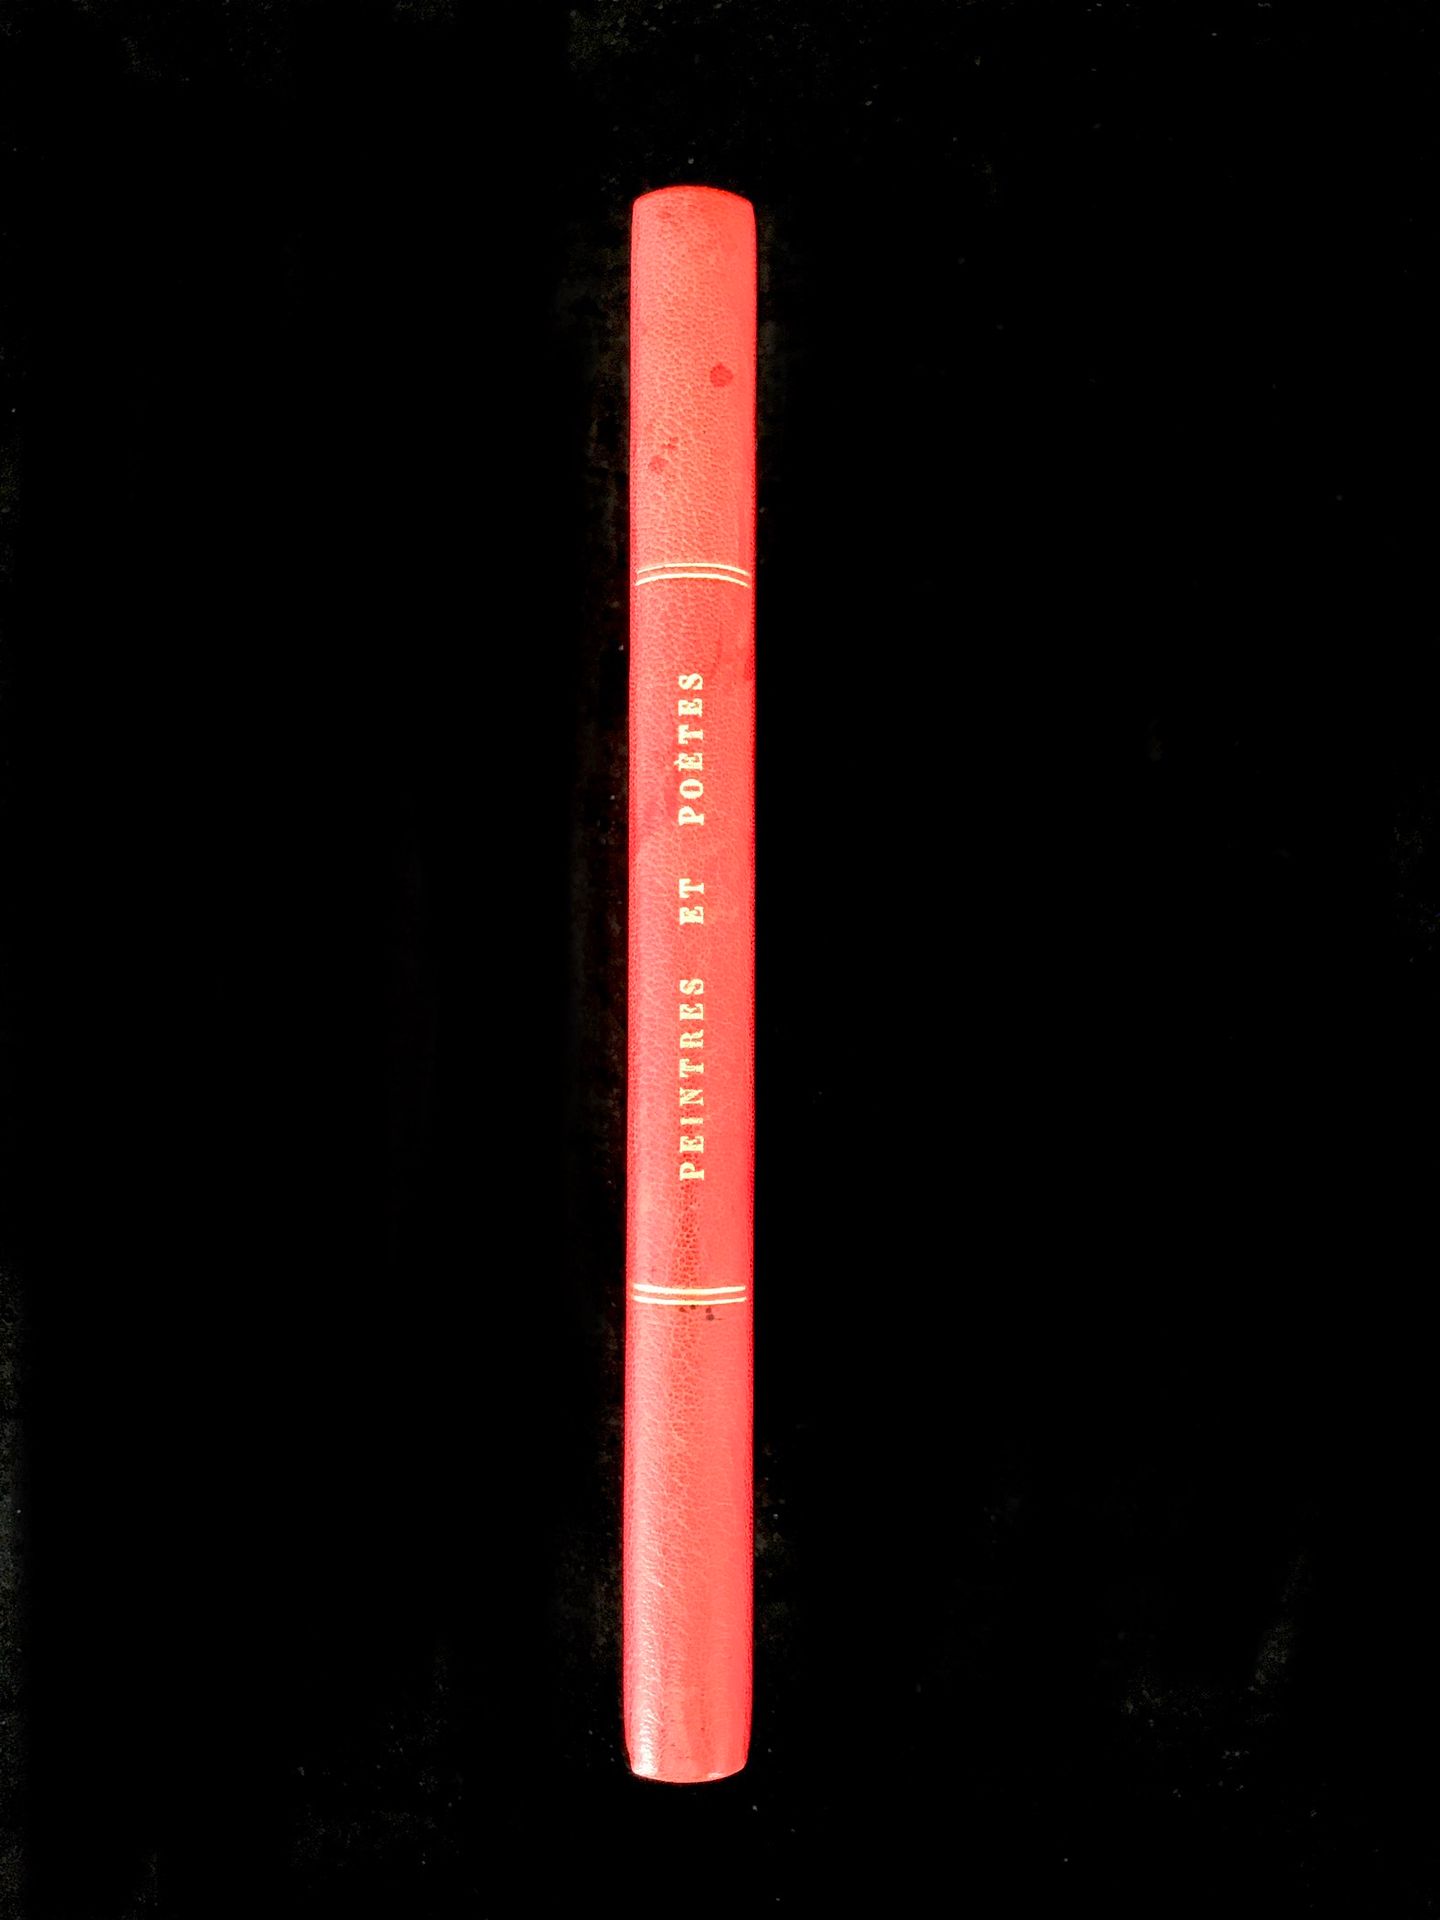 Null 诗歌选集。巴黎，Pierre Trémois，1943年。

4开本，159页，有插图，全羊皮纸，光滑的书脊，封面上有各位诗人的签名，宽的内边框，装在&hellip;